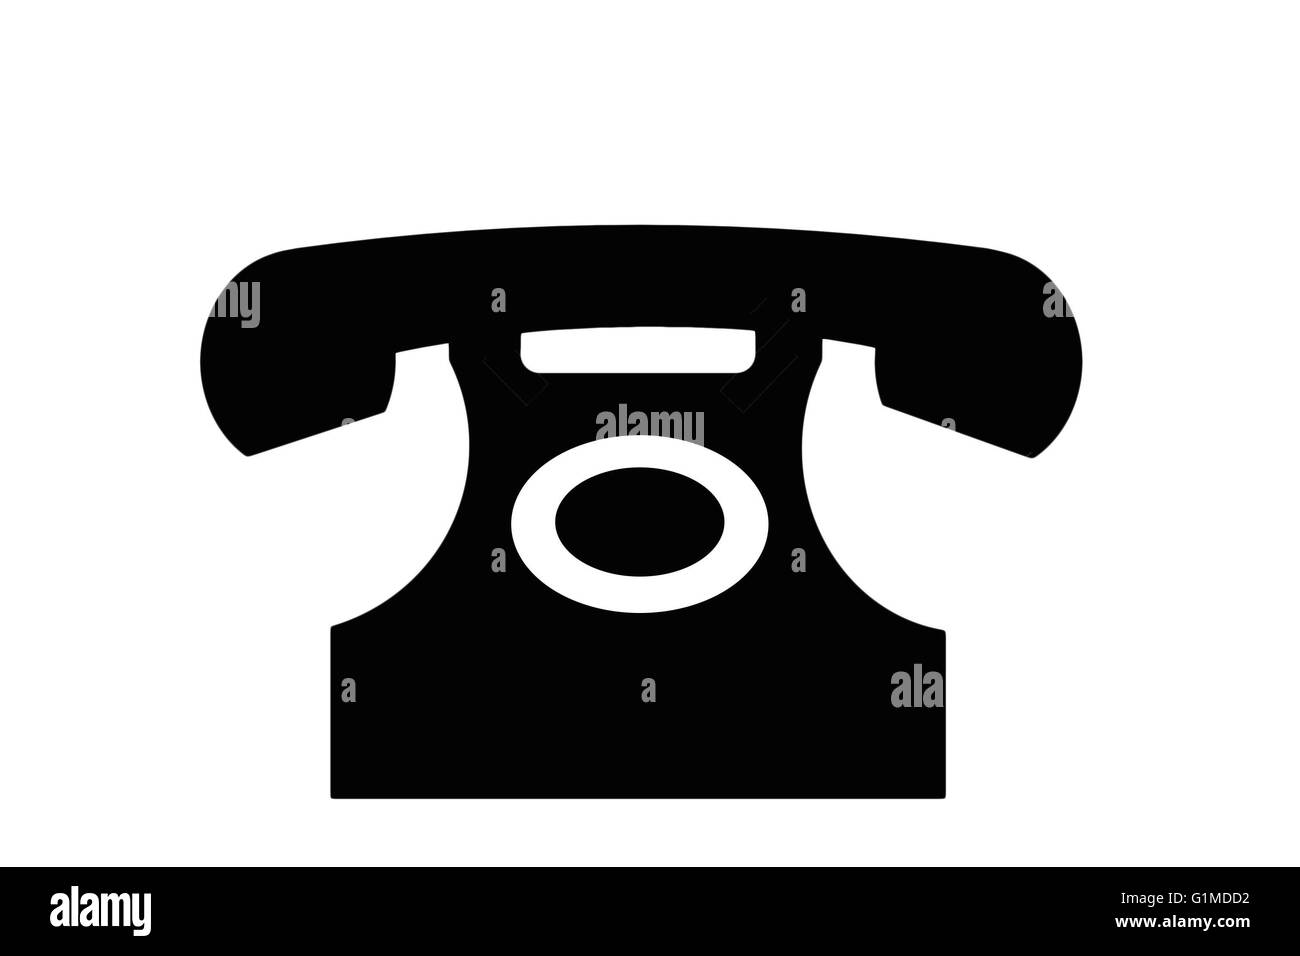 A black telephone icon or symbol isolated on white. Stock Photo